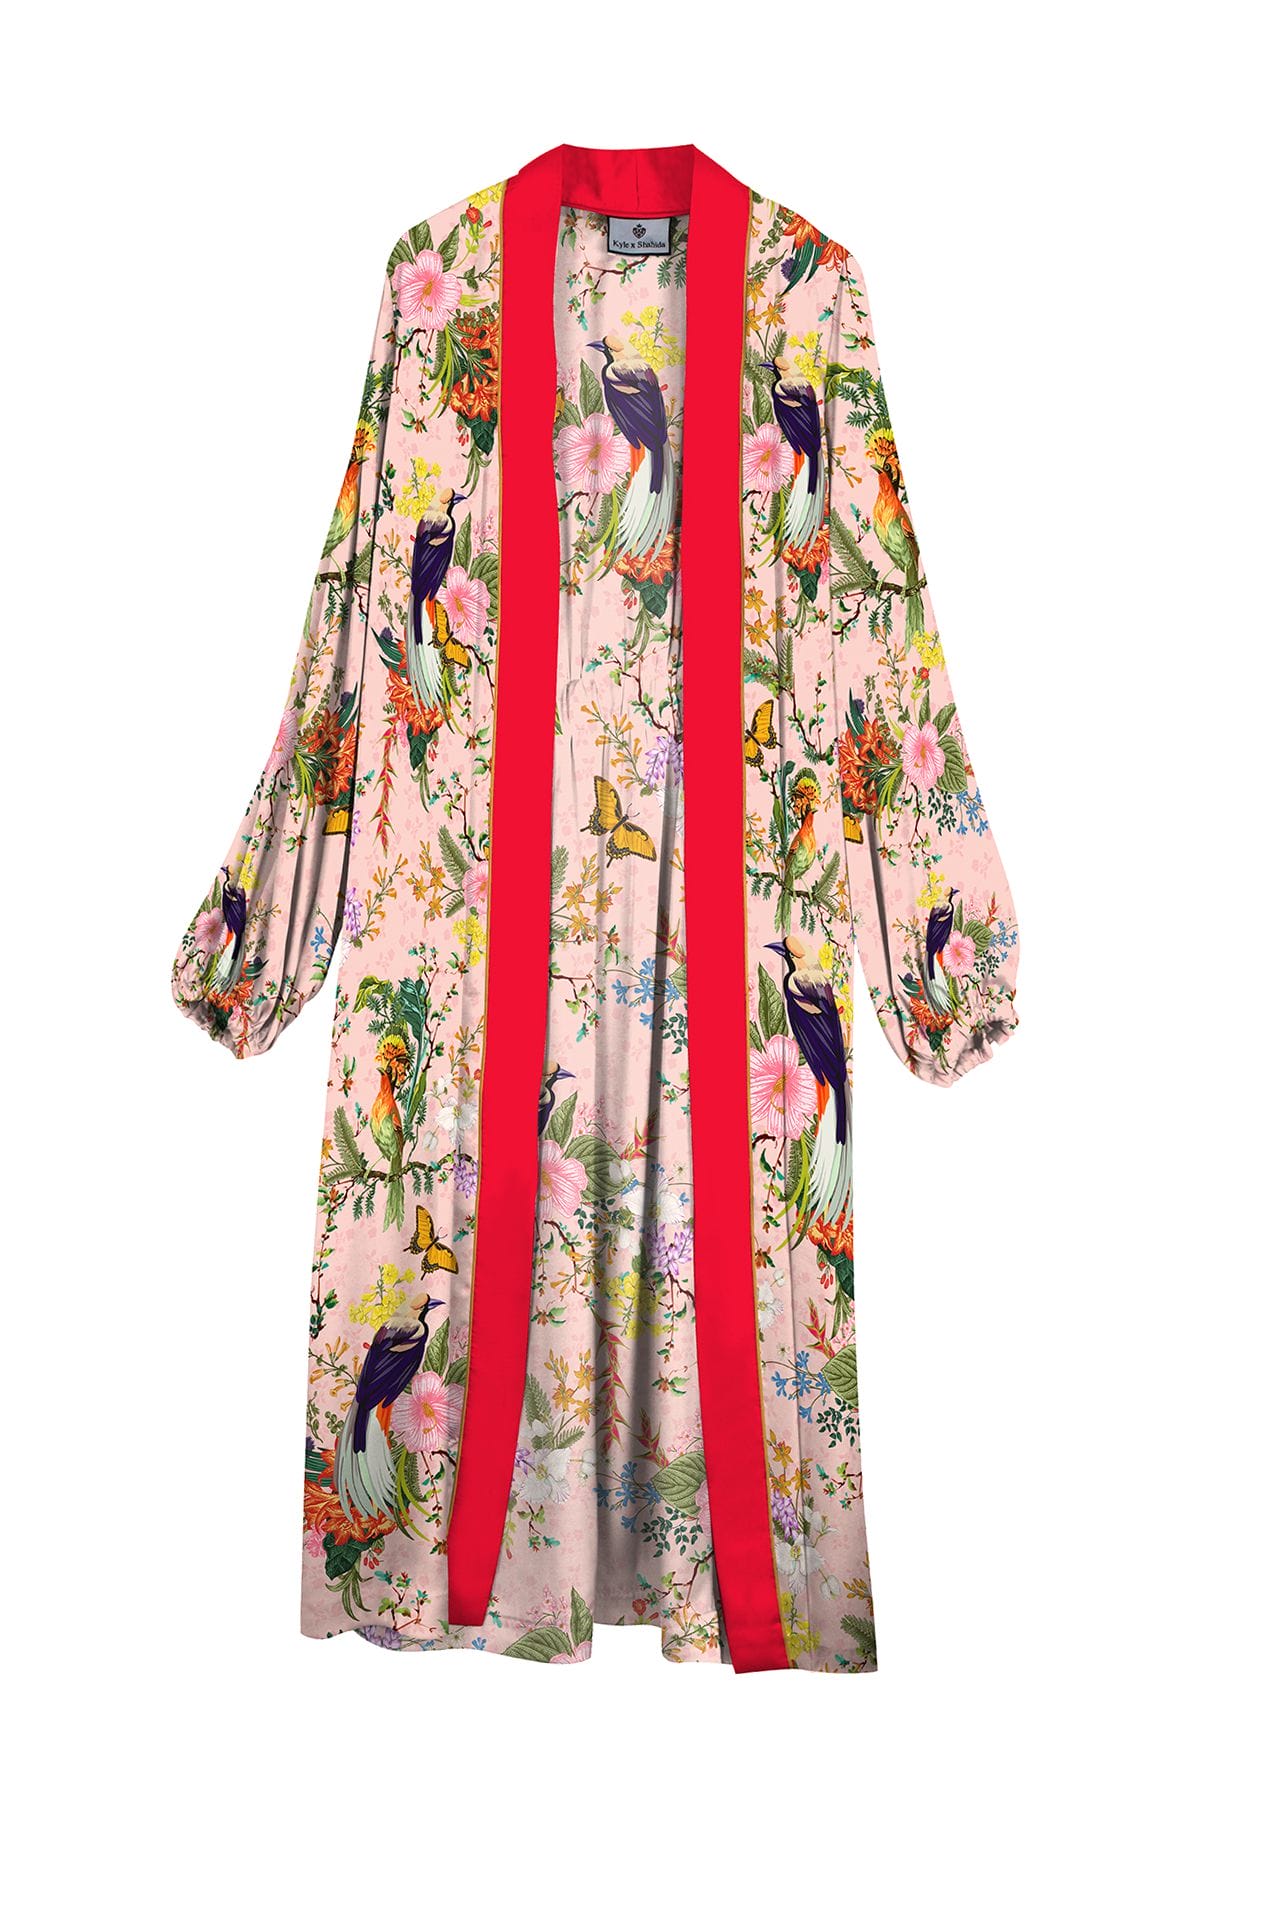 "Kyle X Shahida" "long silk kimono" "hot pink silk robe" "womens long kimono" "silk robes for women"